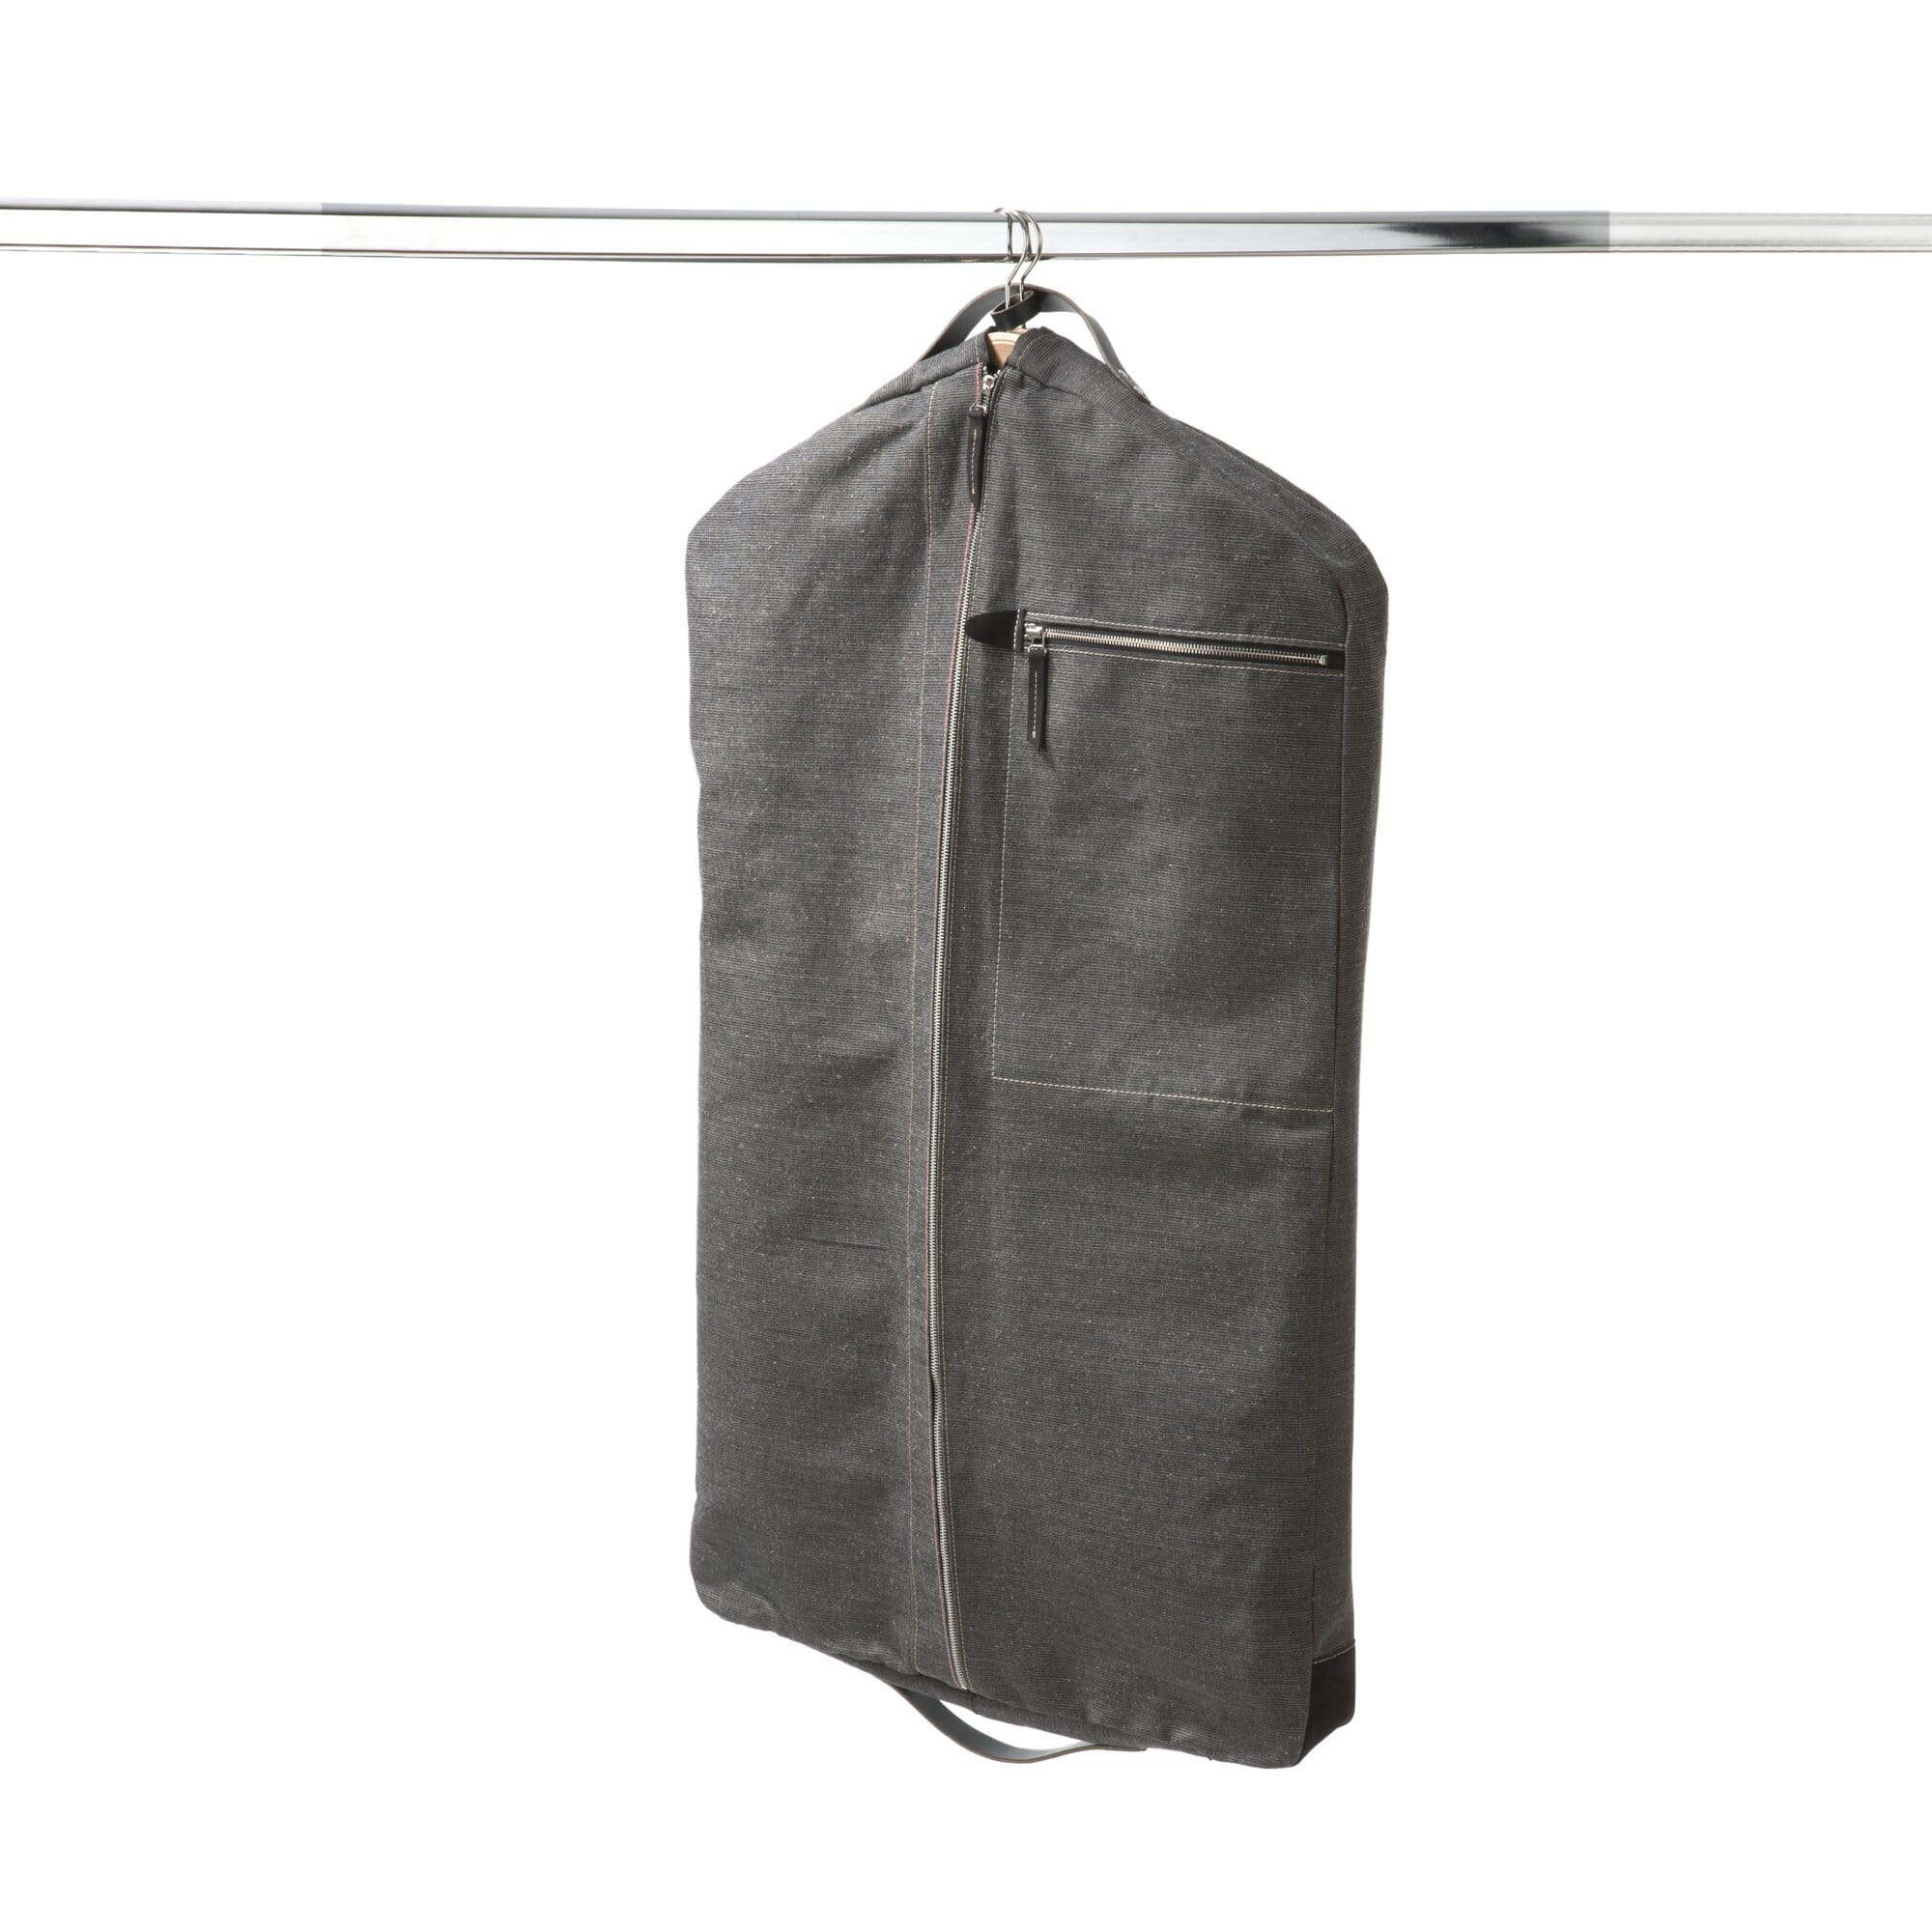 NEU 135 x 60 cm OVP Romantik Kleidersack Shabby  Garment Bag 